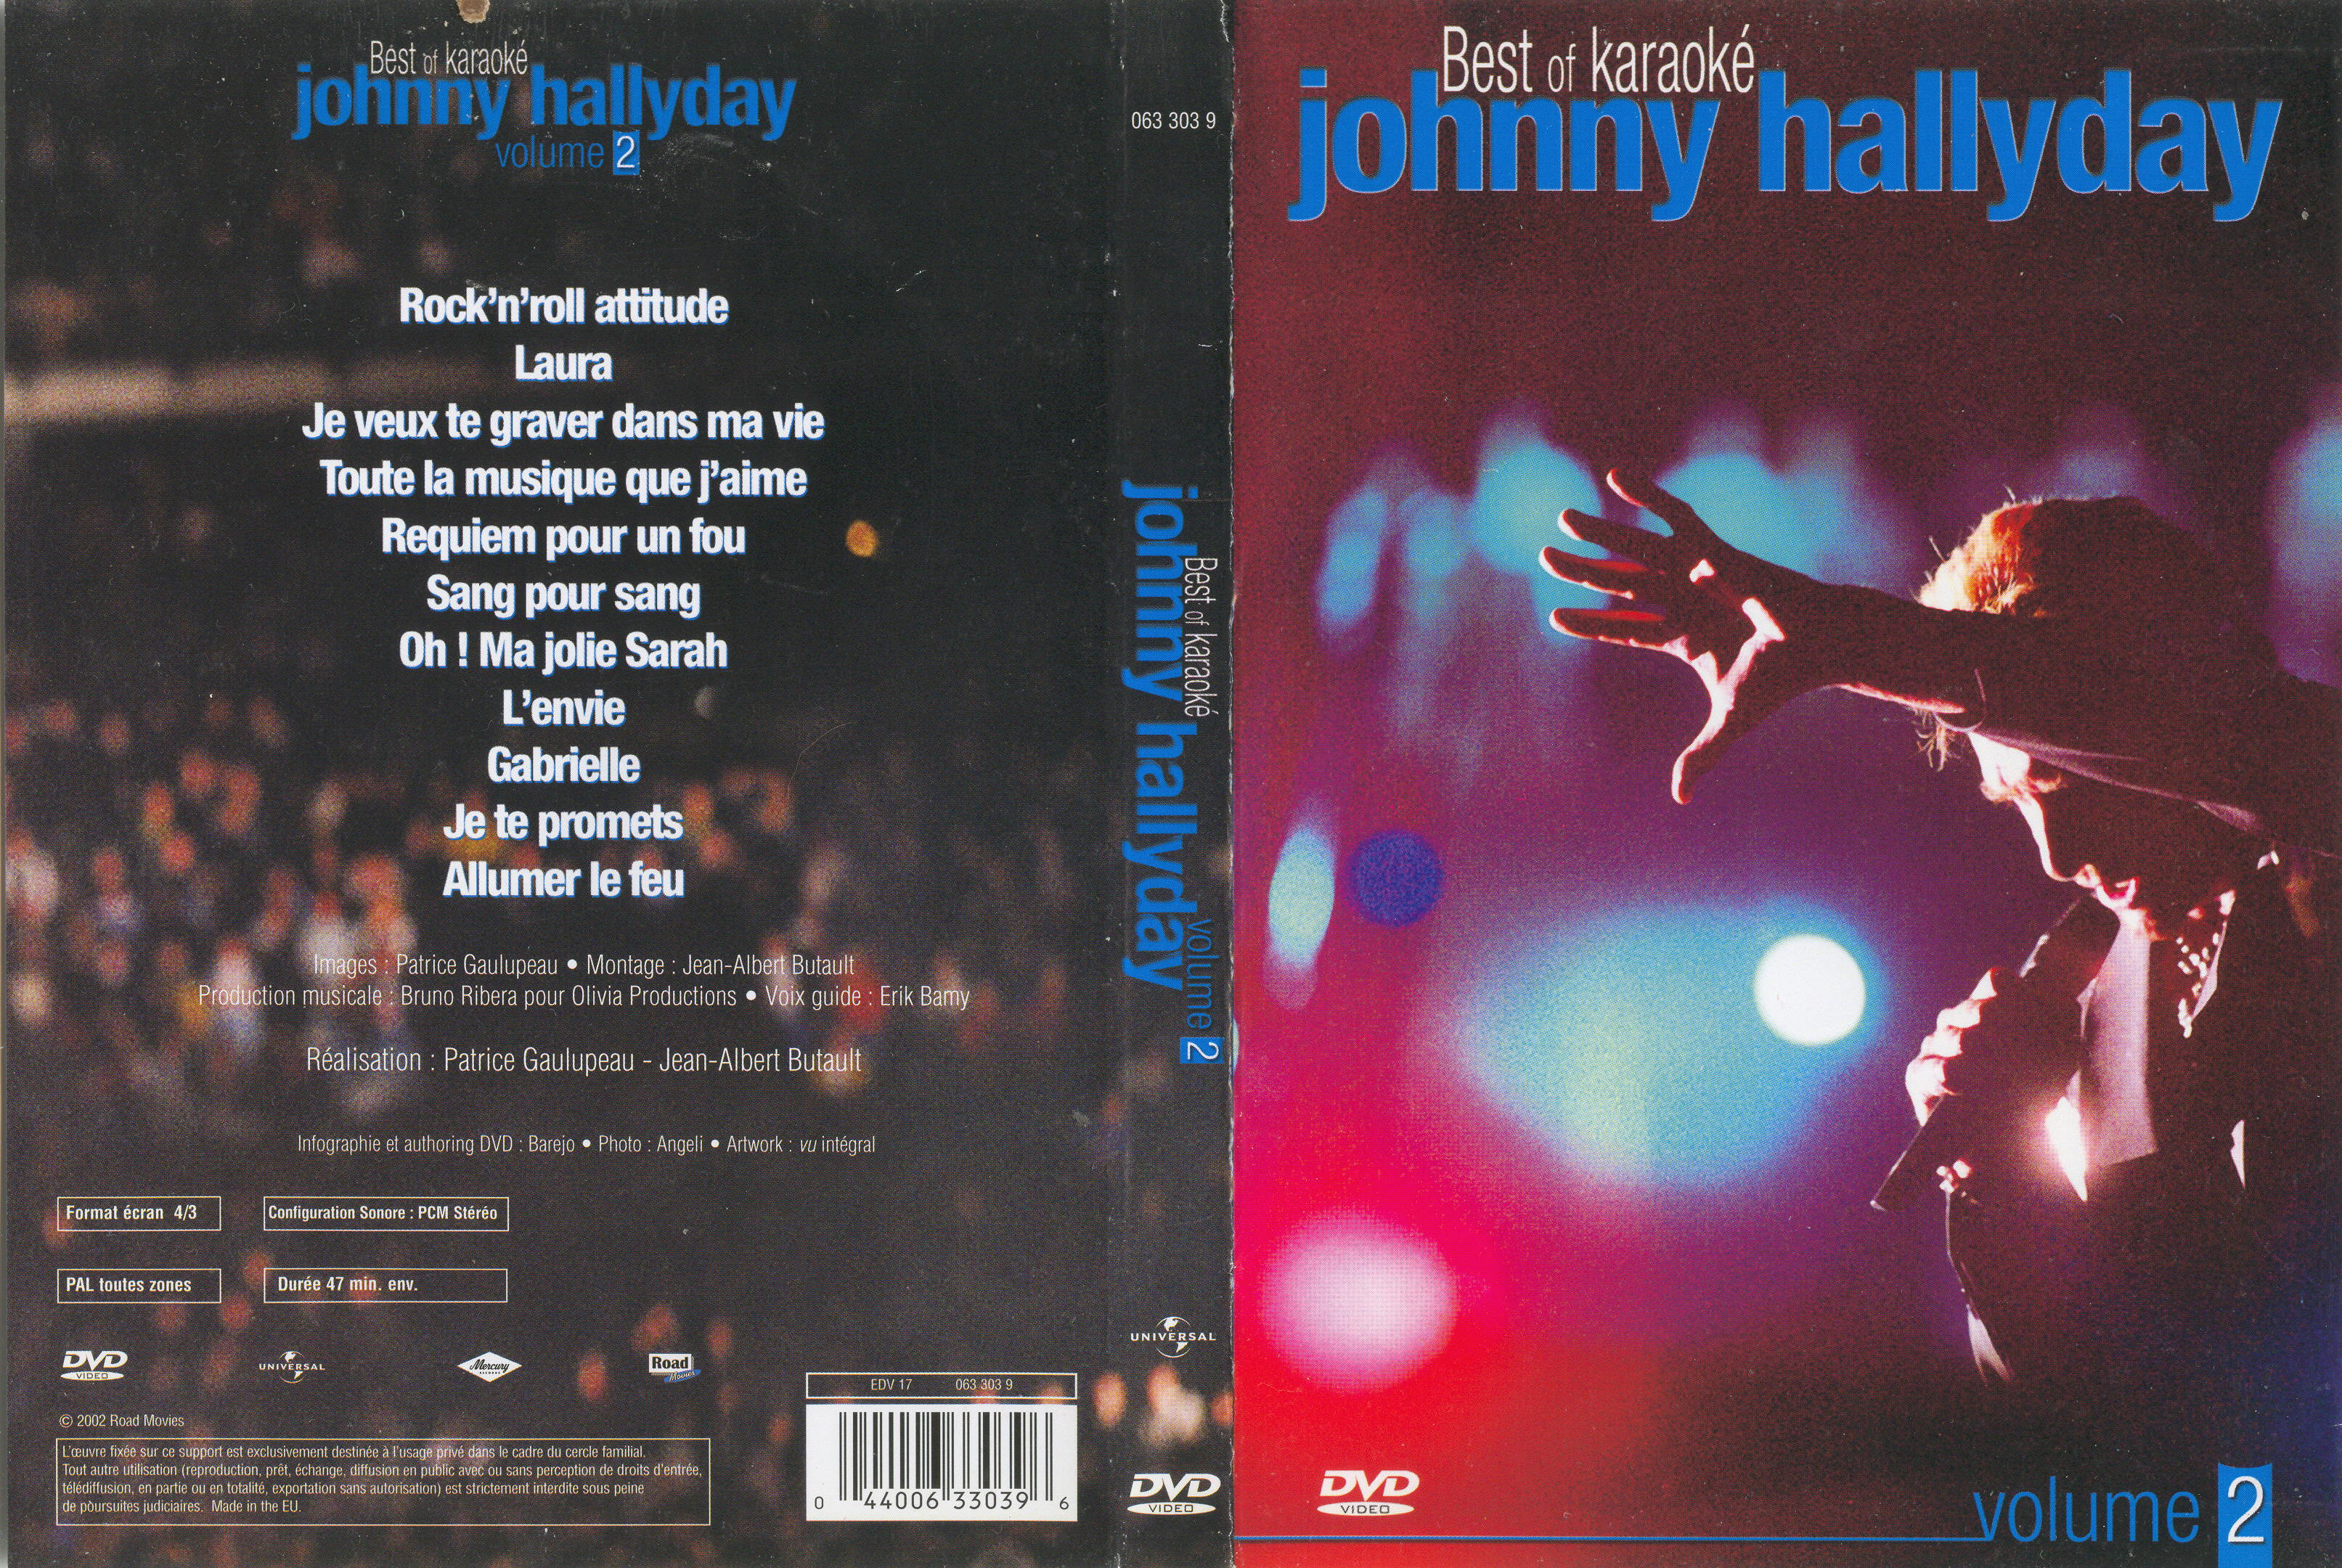 Jaquette DVD Johnny hallyday - best of karaoke vol 2